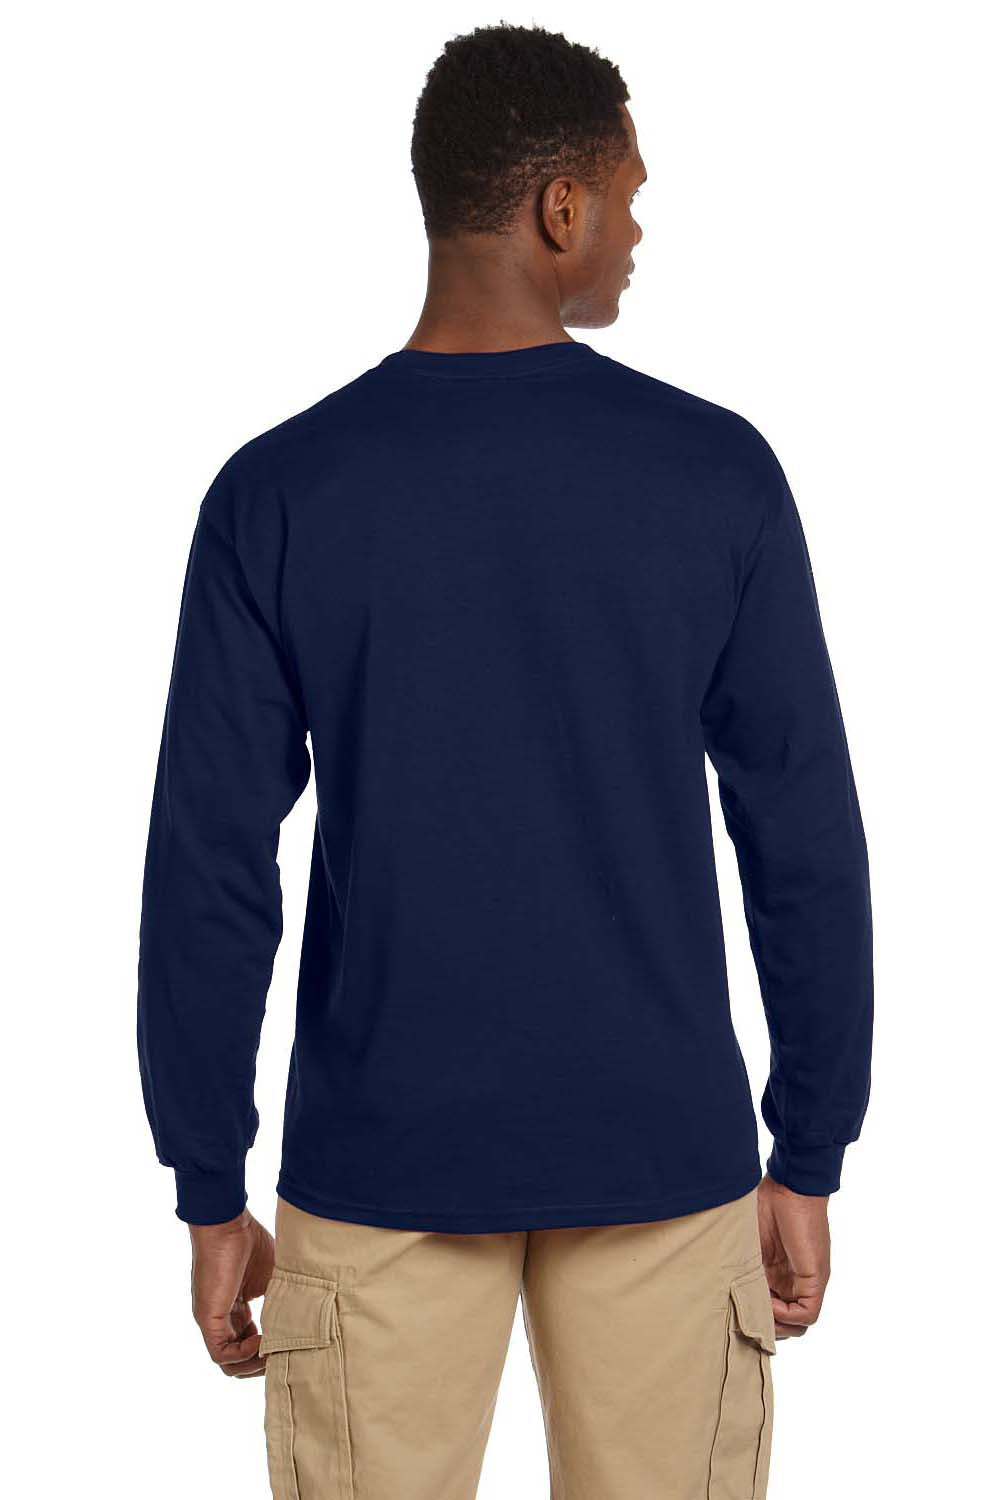 Gildan G241 Mens Ultra Long Sleeve Crewneck T-Shirt w/ Pocket Navy Blue Back